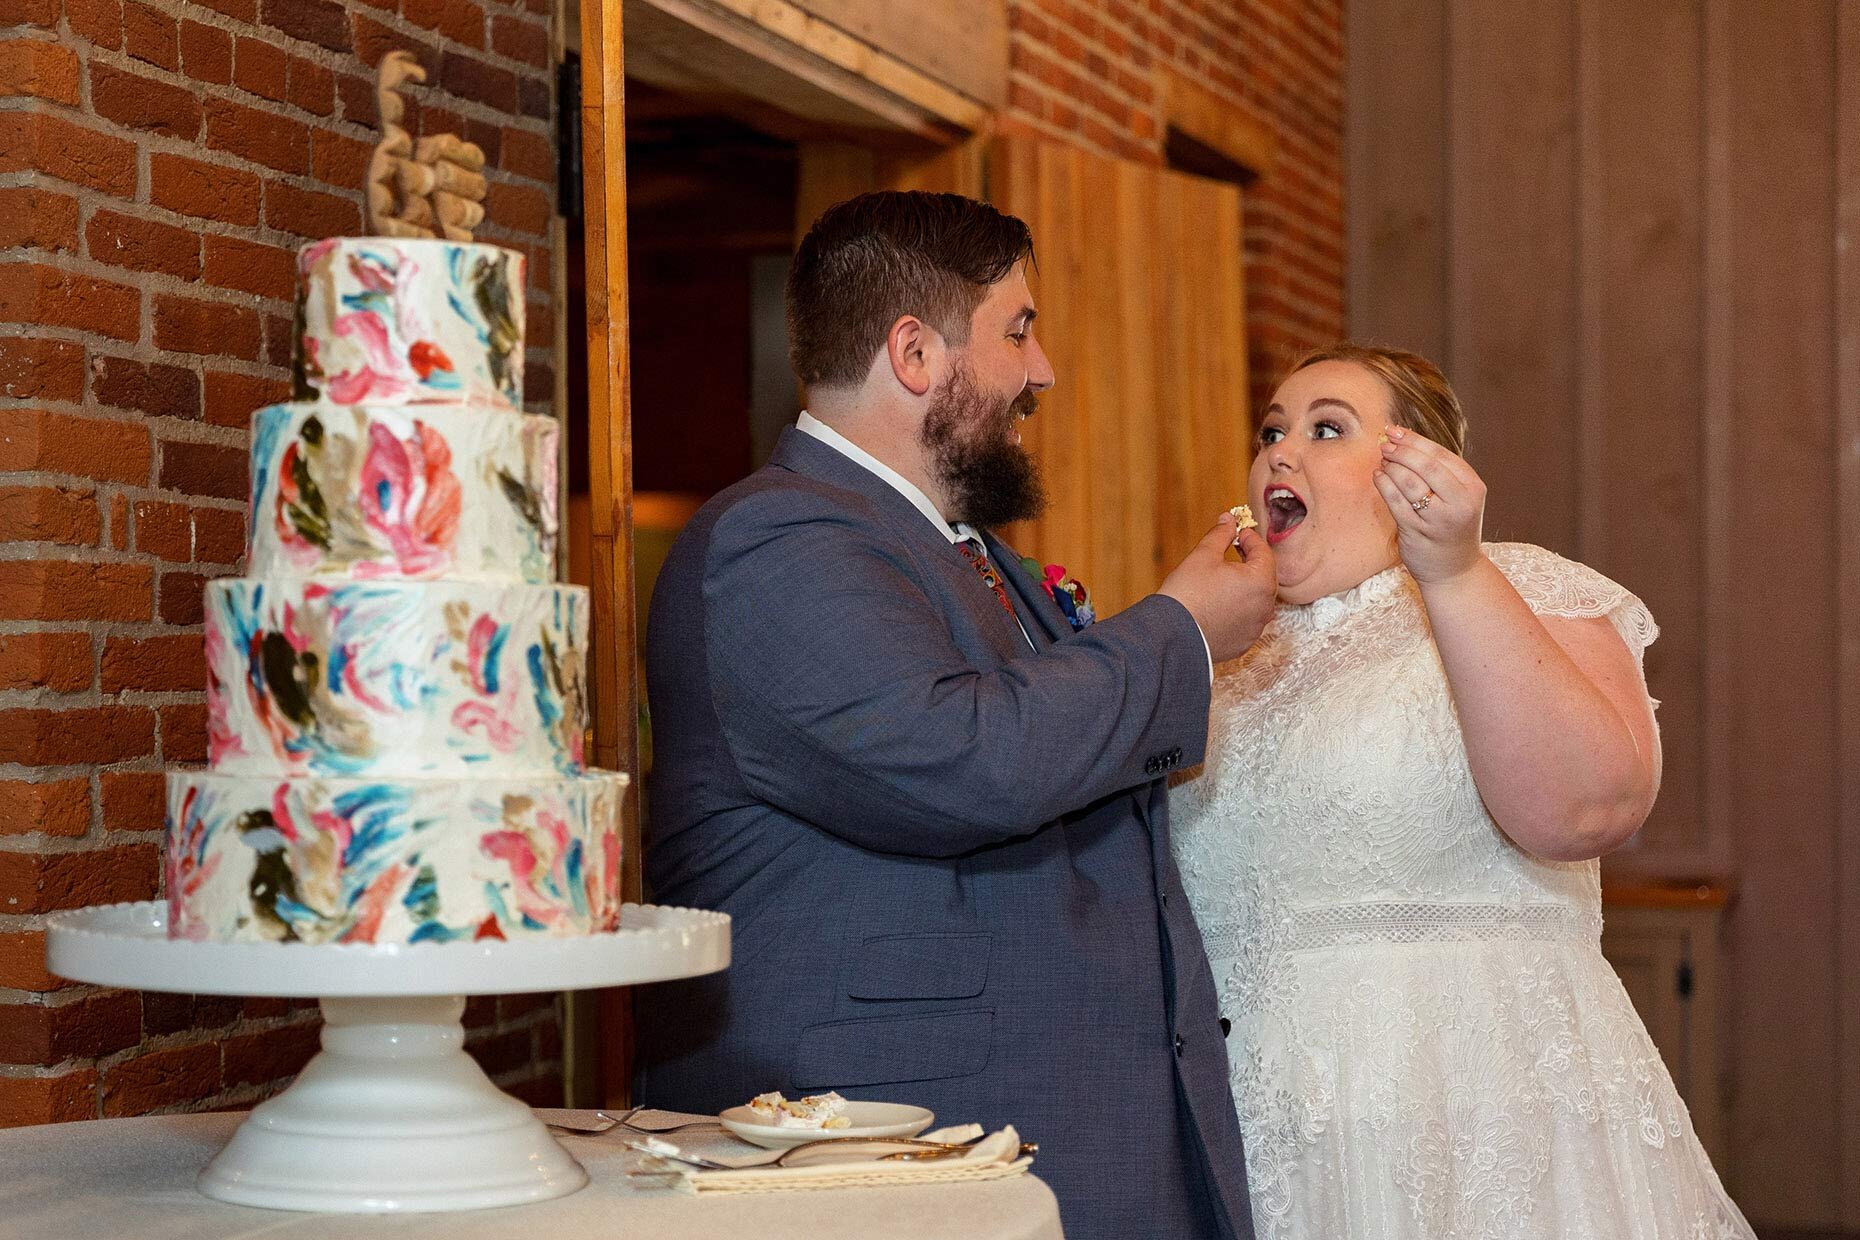 Groom feeding cake to bride